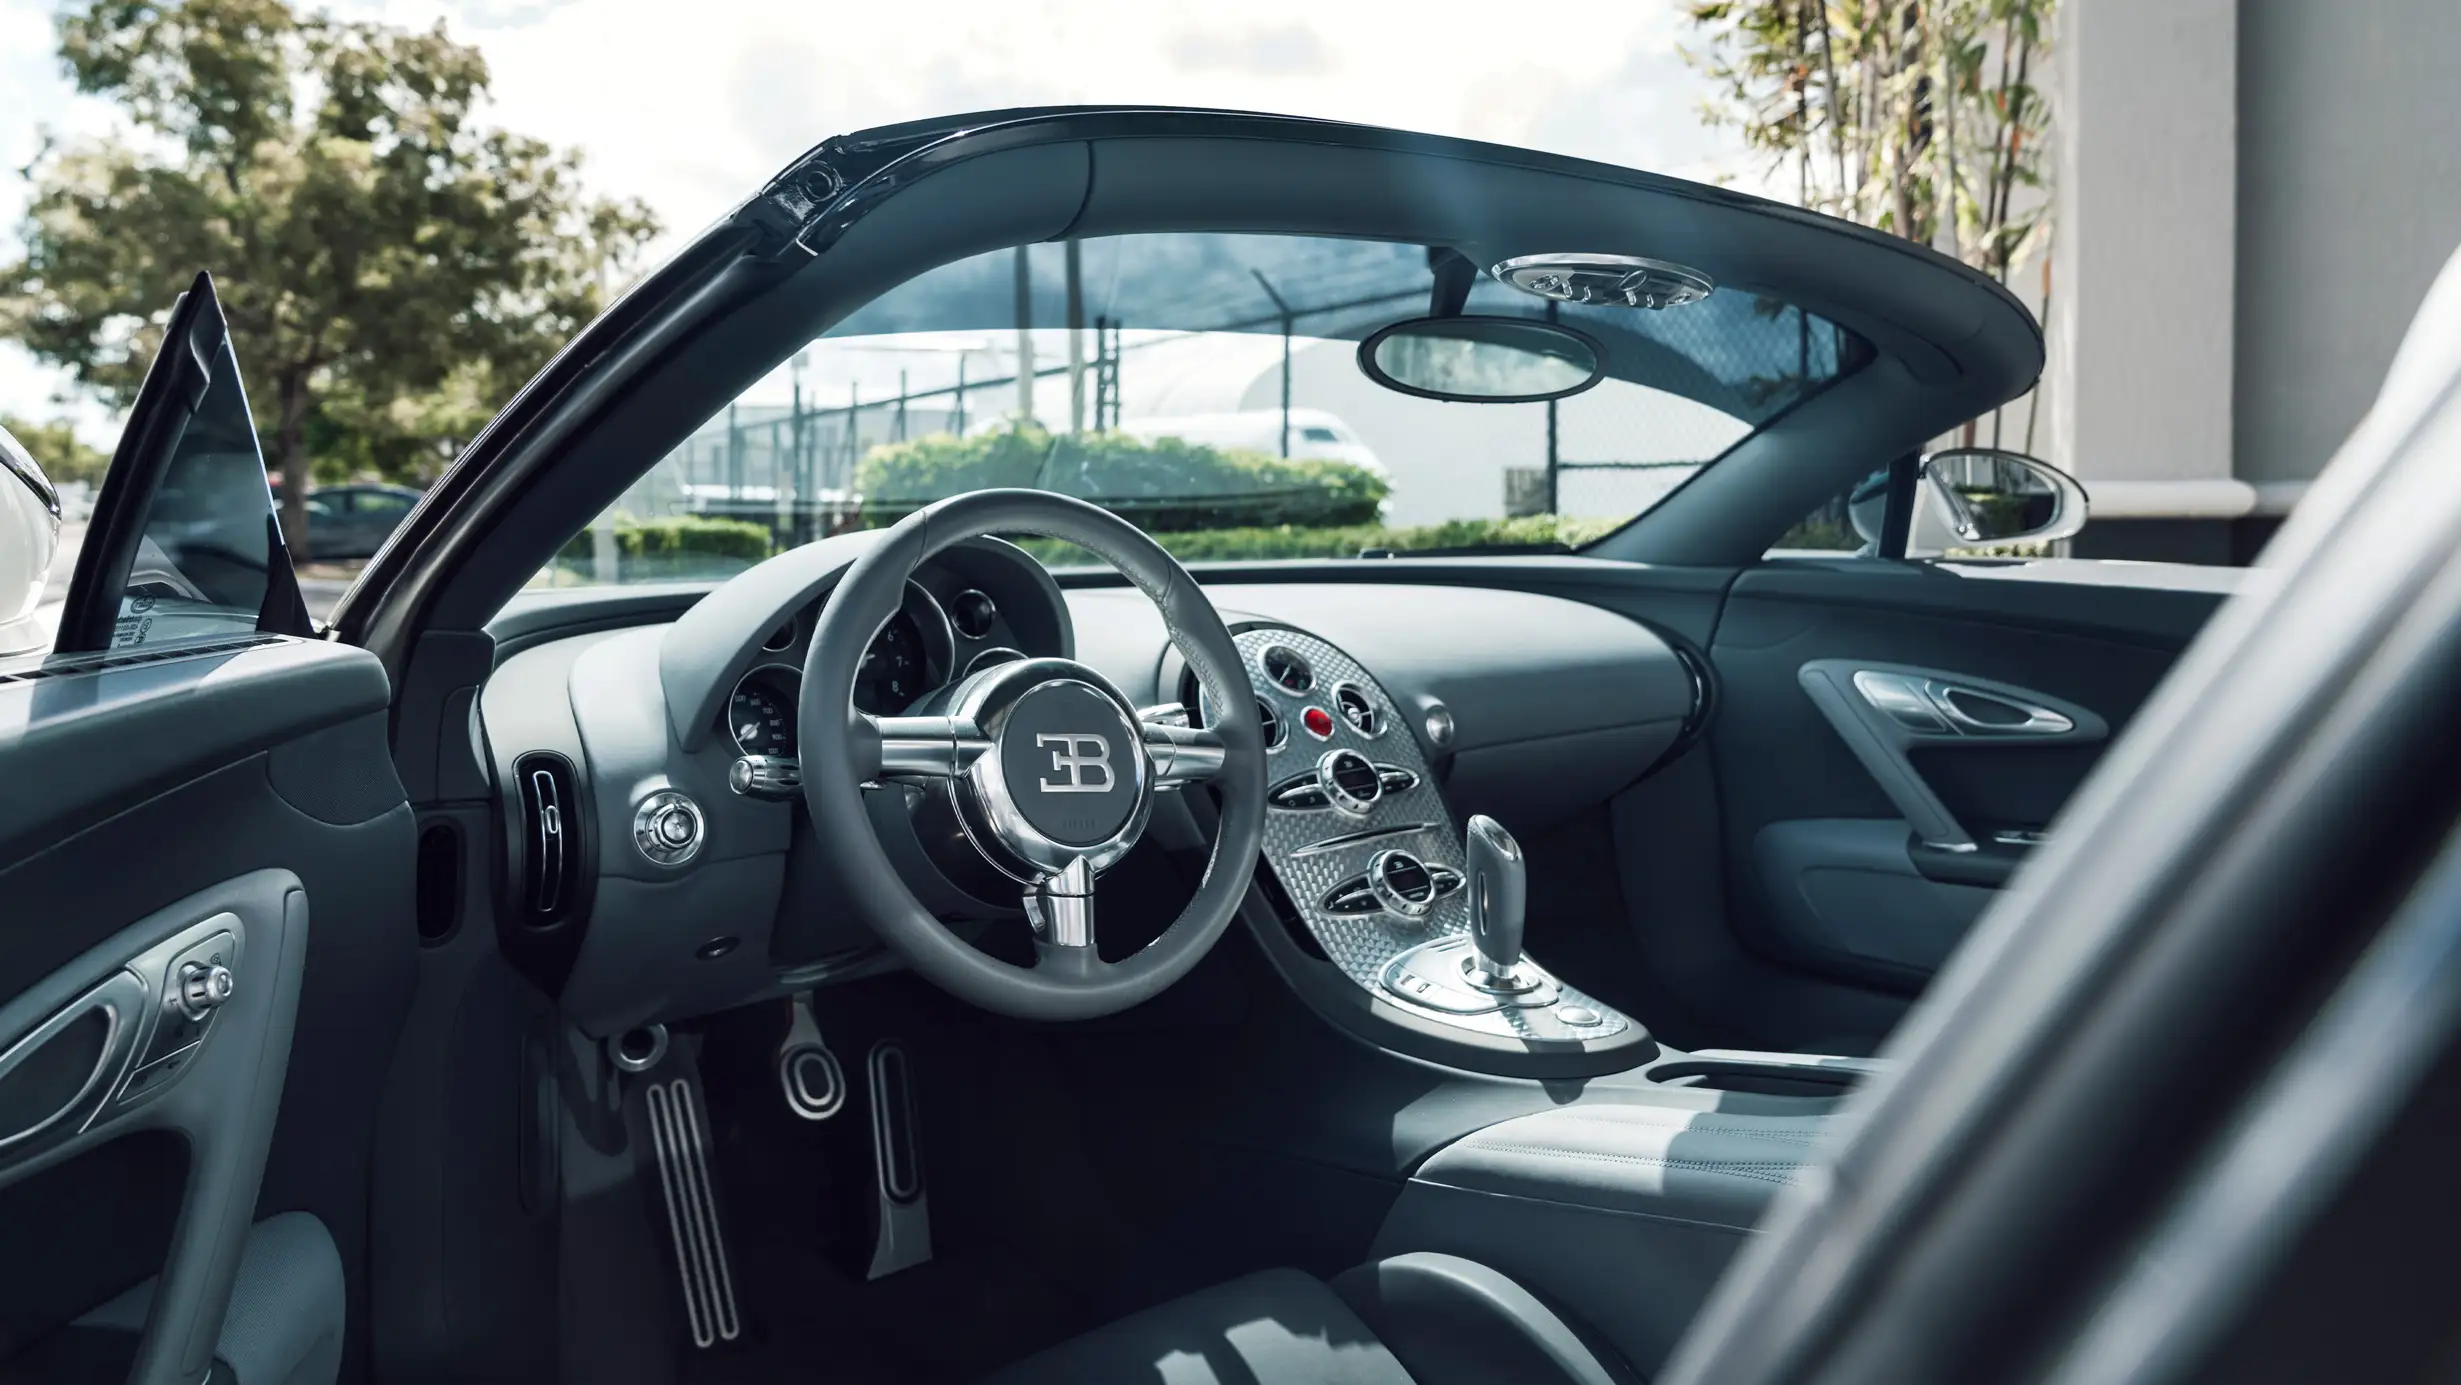 Bugatti Veyron roadster rental interior mph club